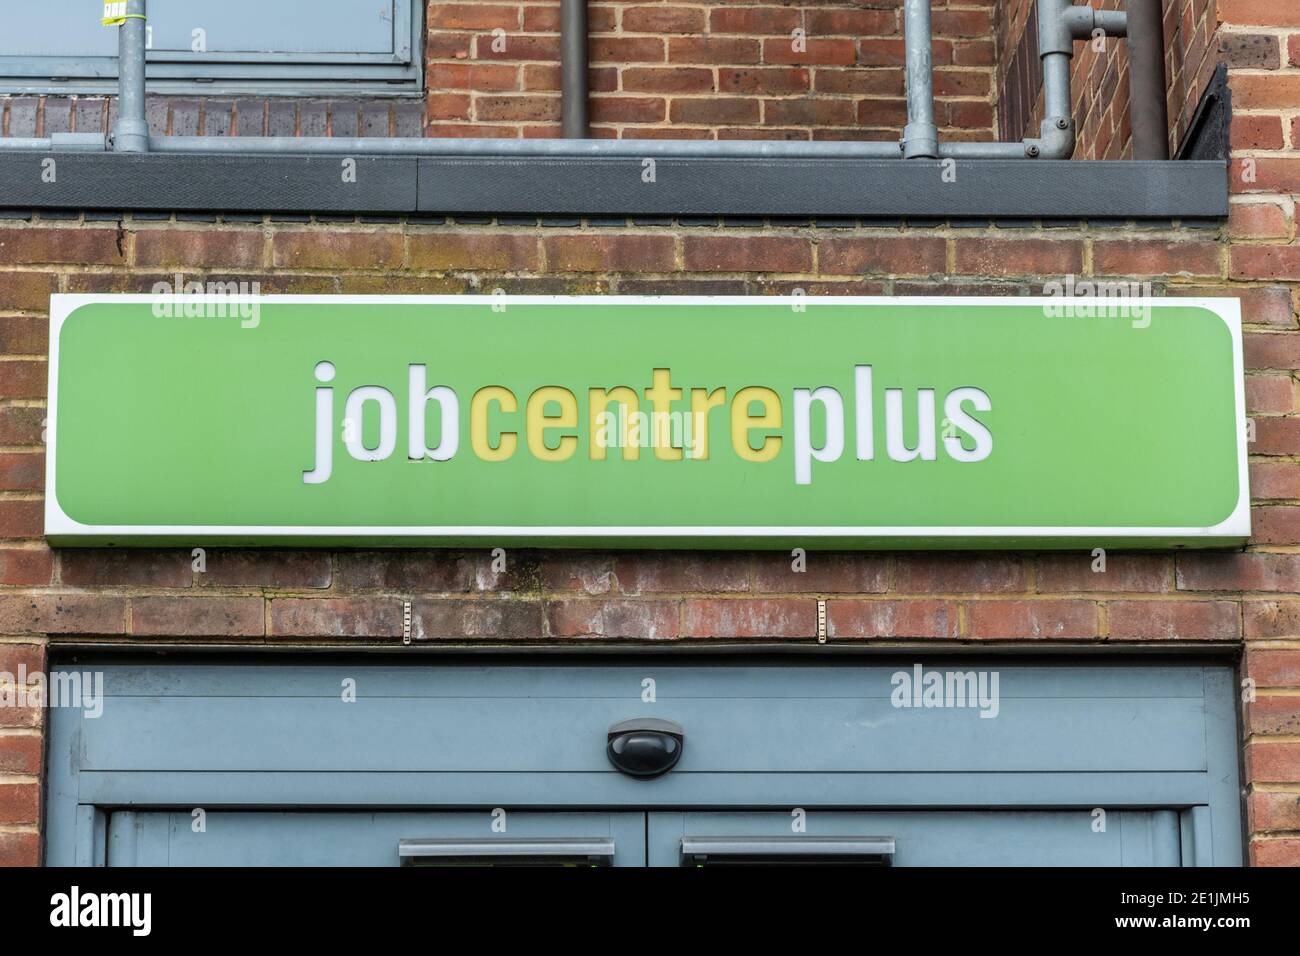 Job centre plus sign, UK Stock Photo